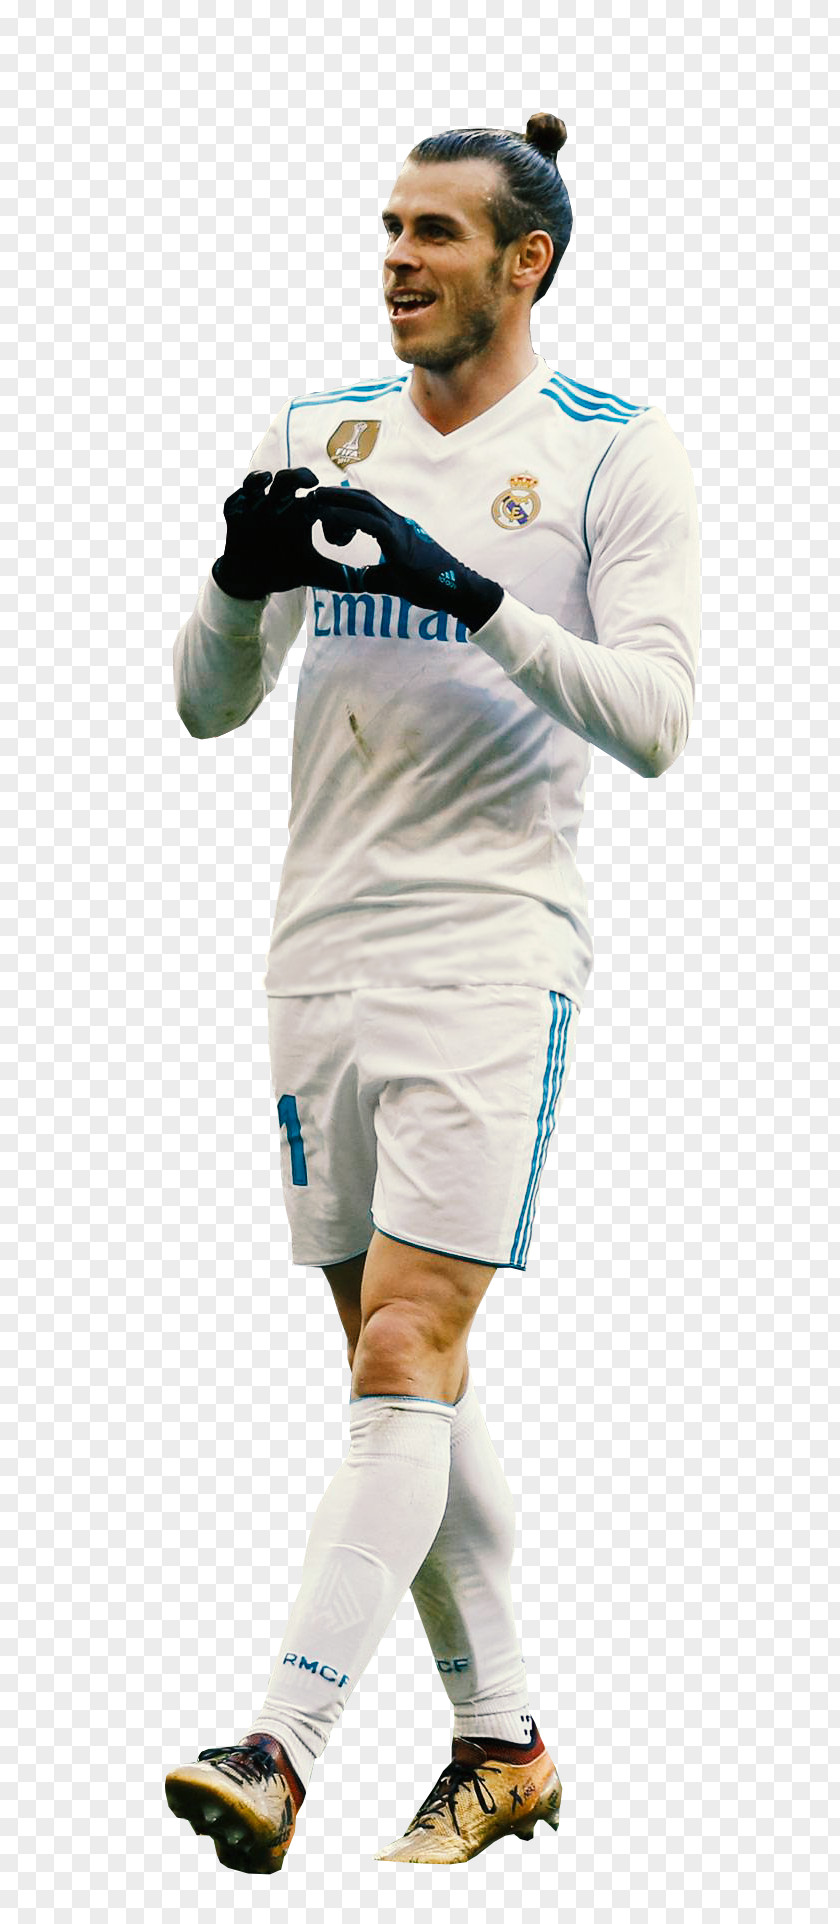 Cristiano Ronaldo Juventus F.C. Real Madrid C.F. Football Player Athlete PNG